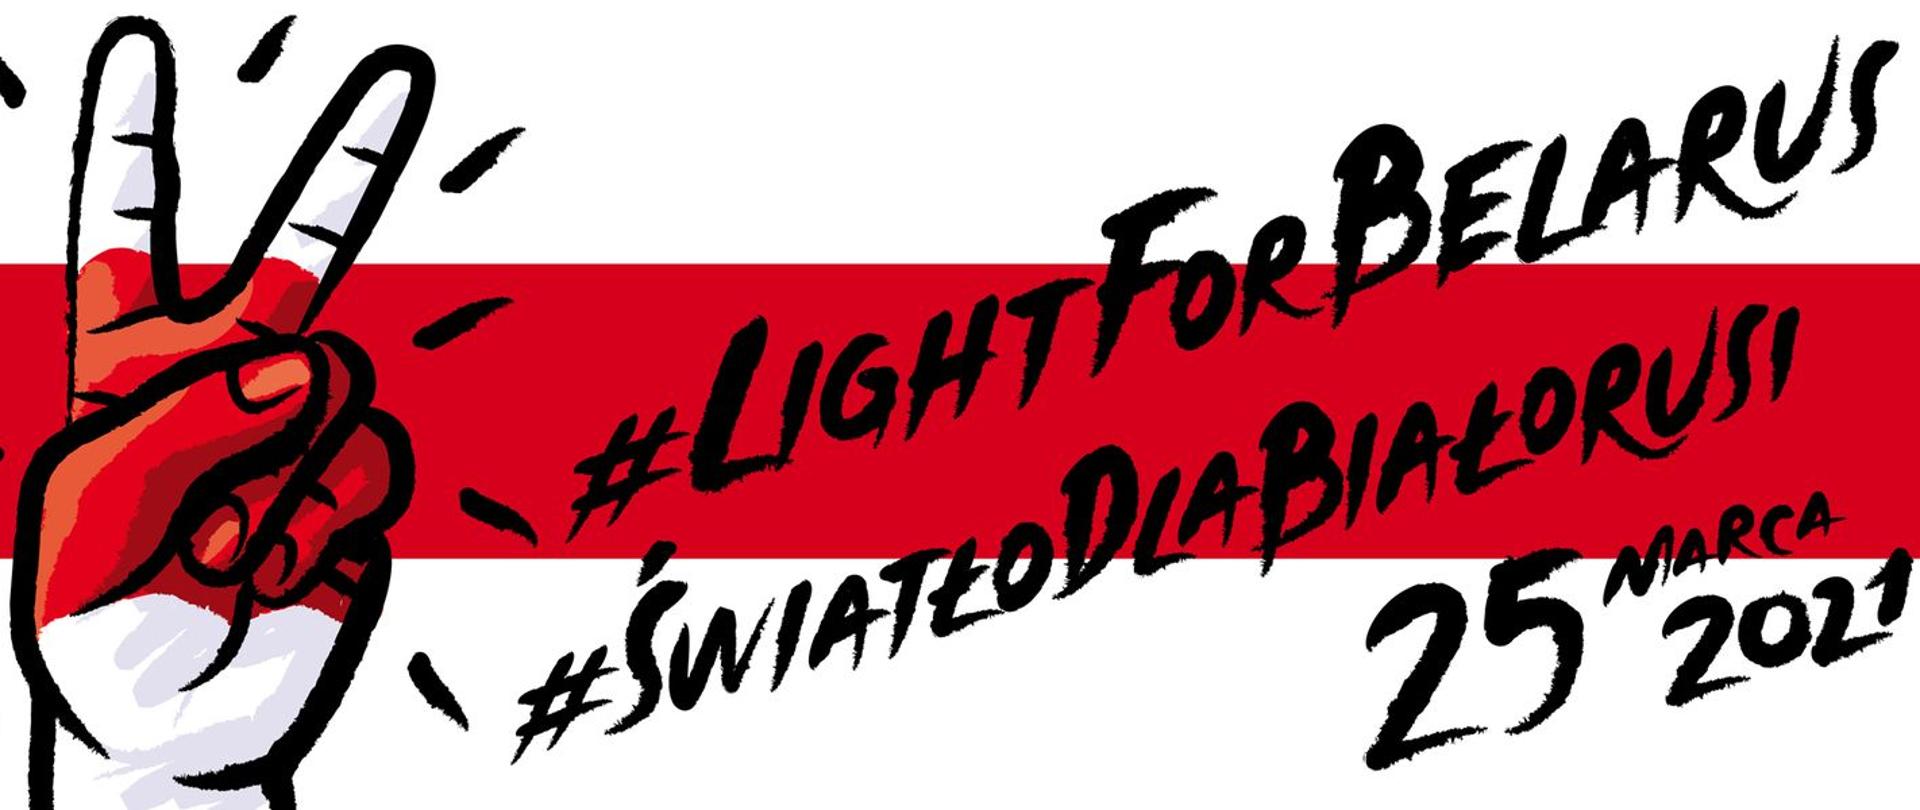 Logo akcji #LightForBelarus